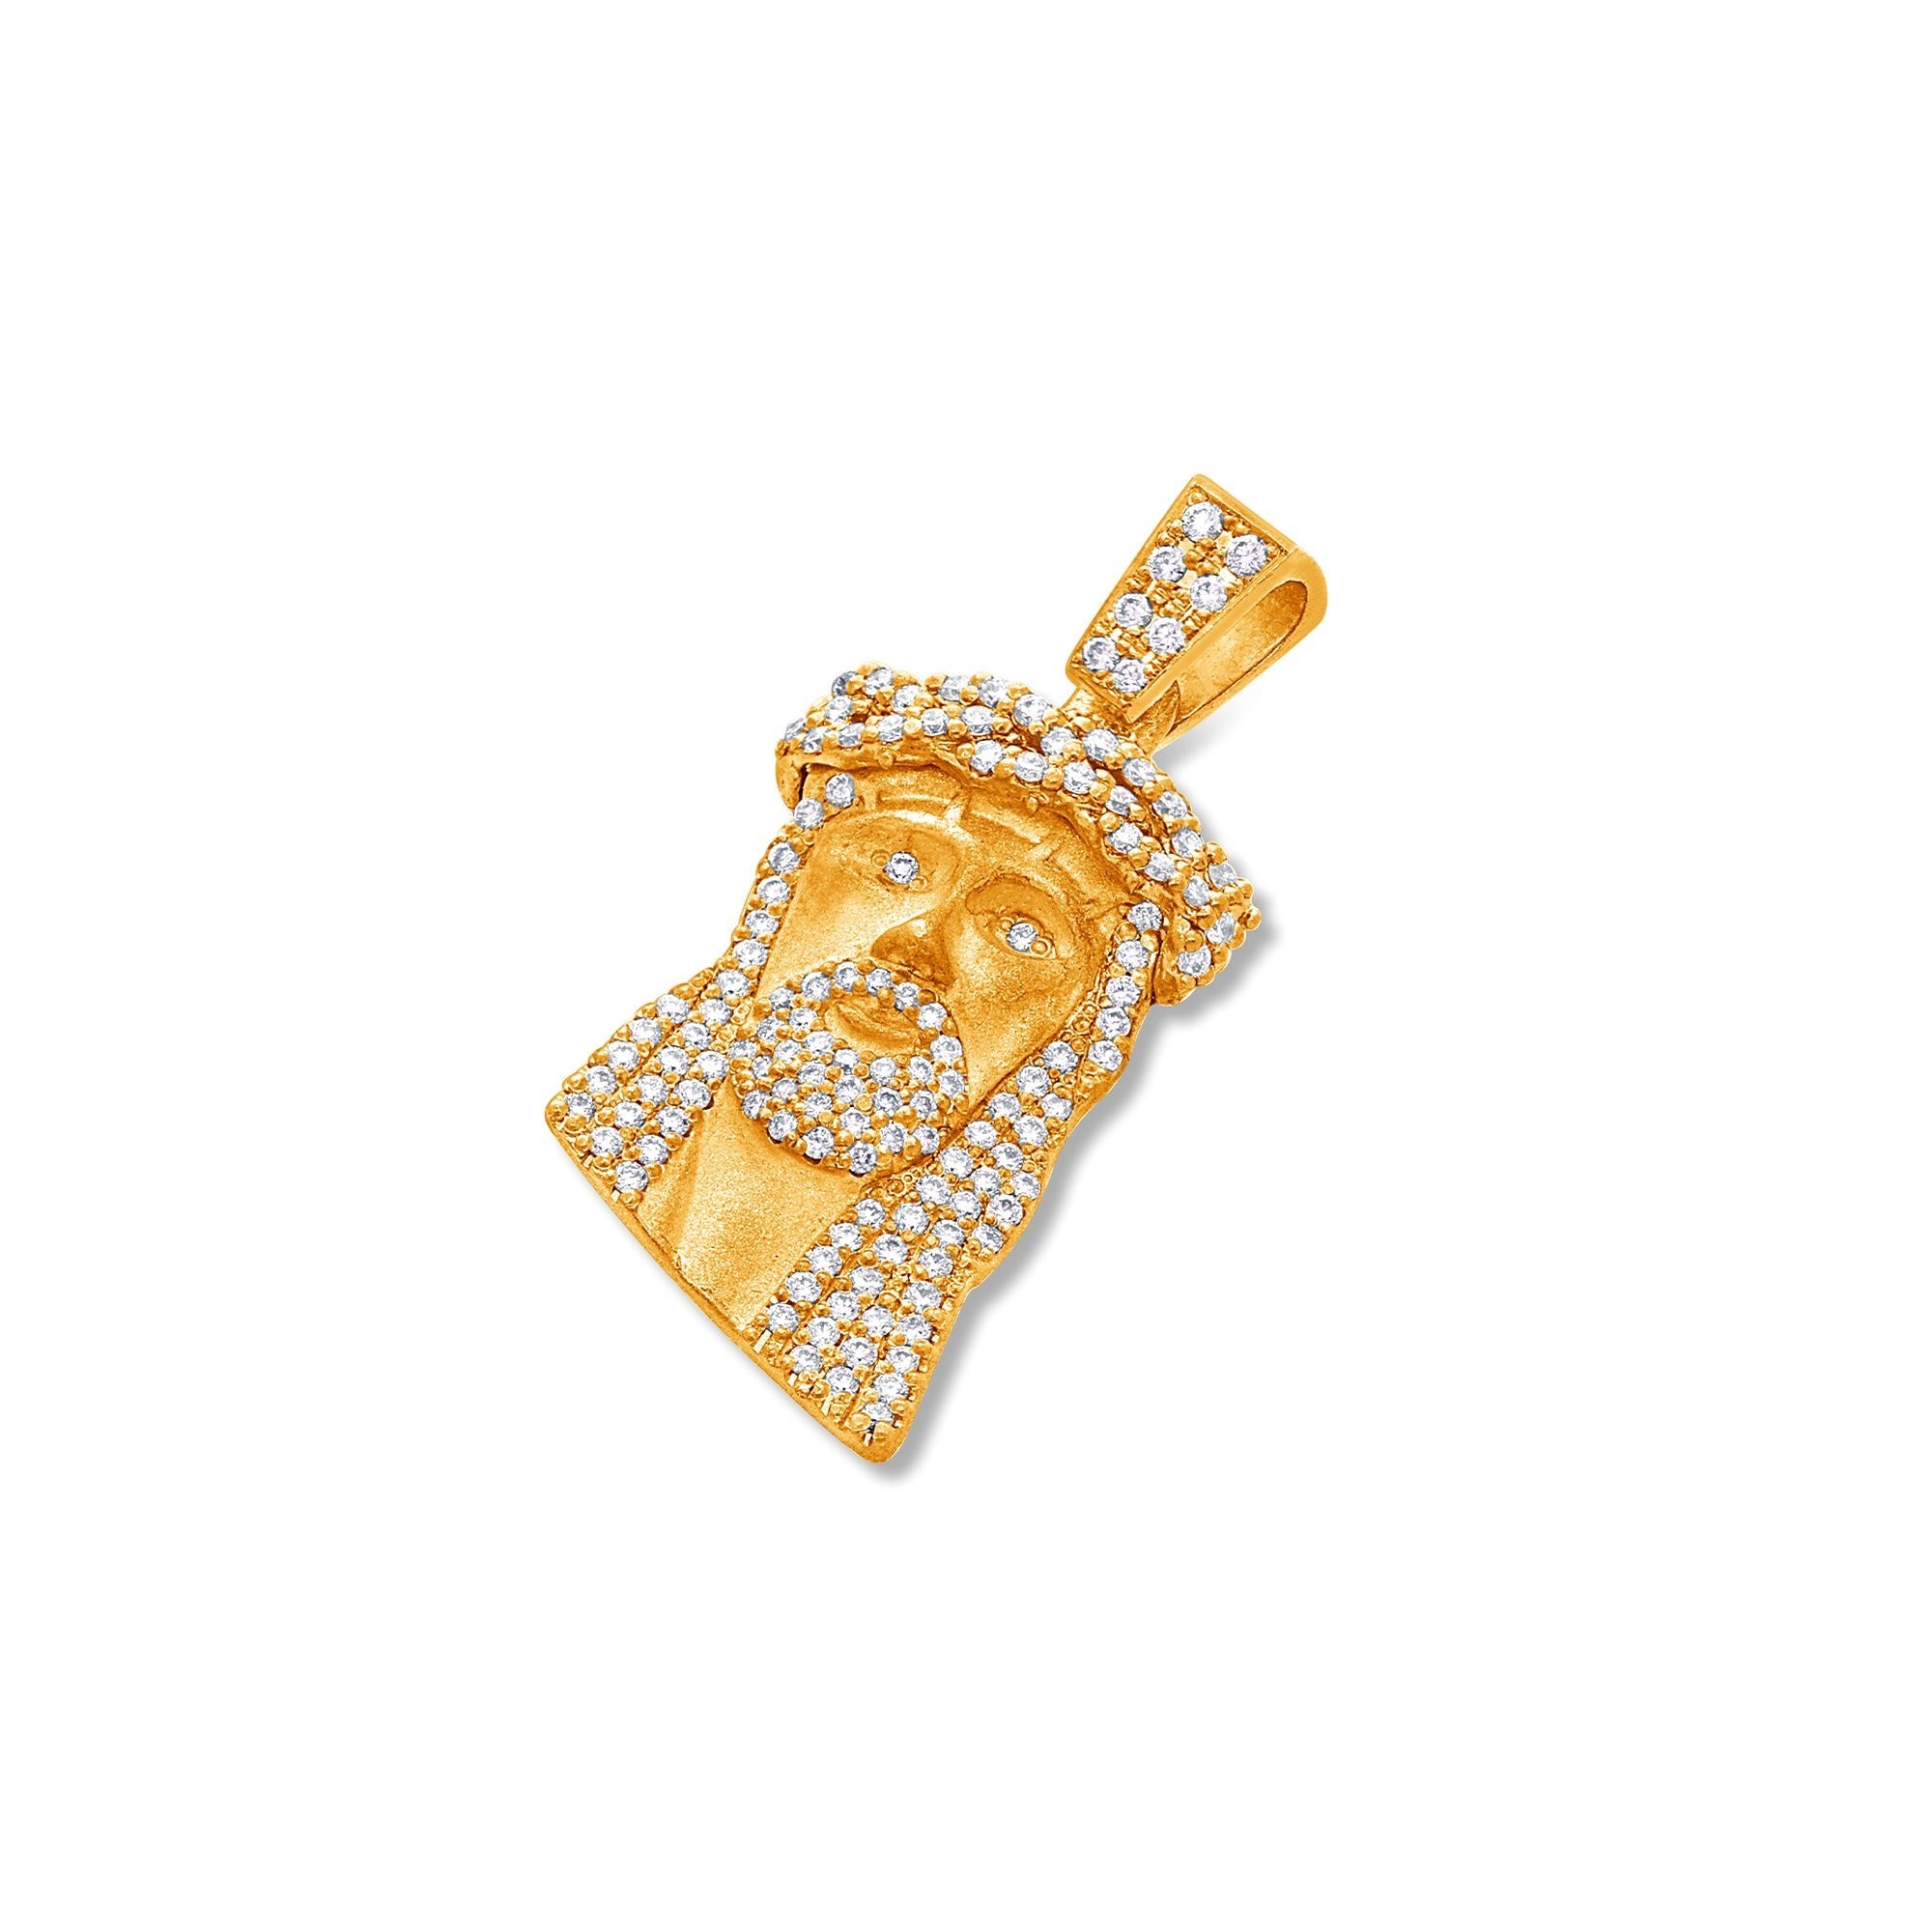 Micro Jesus Piece (Pure 24K, Fully Iced) (24K YELLOW GOLD) - IF & Co. Custom Jewelers